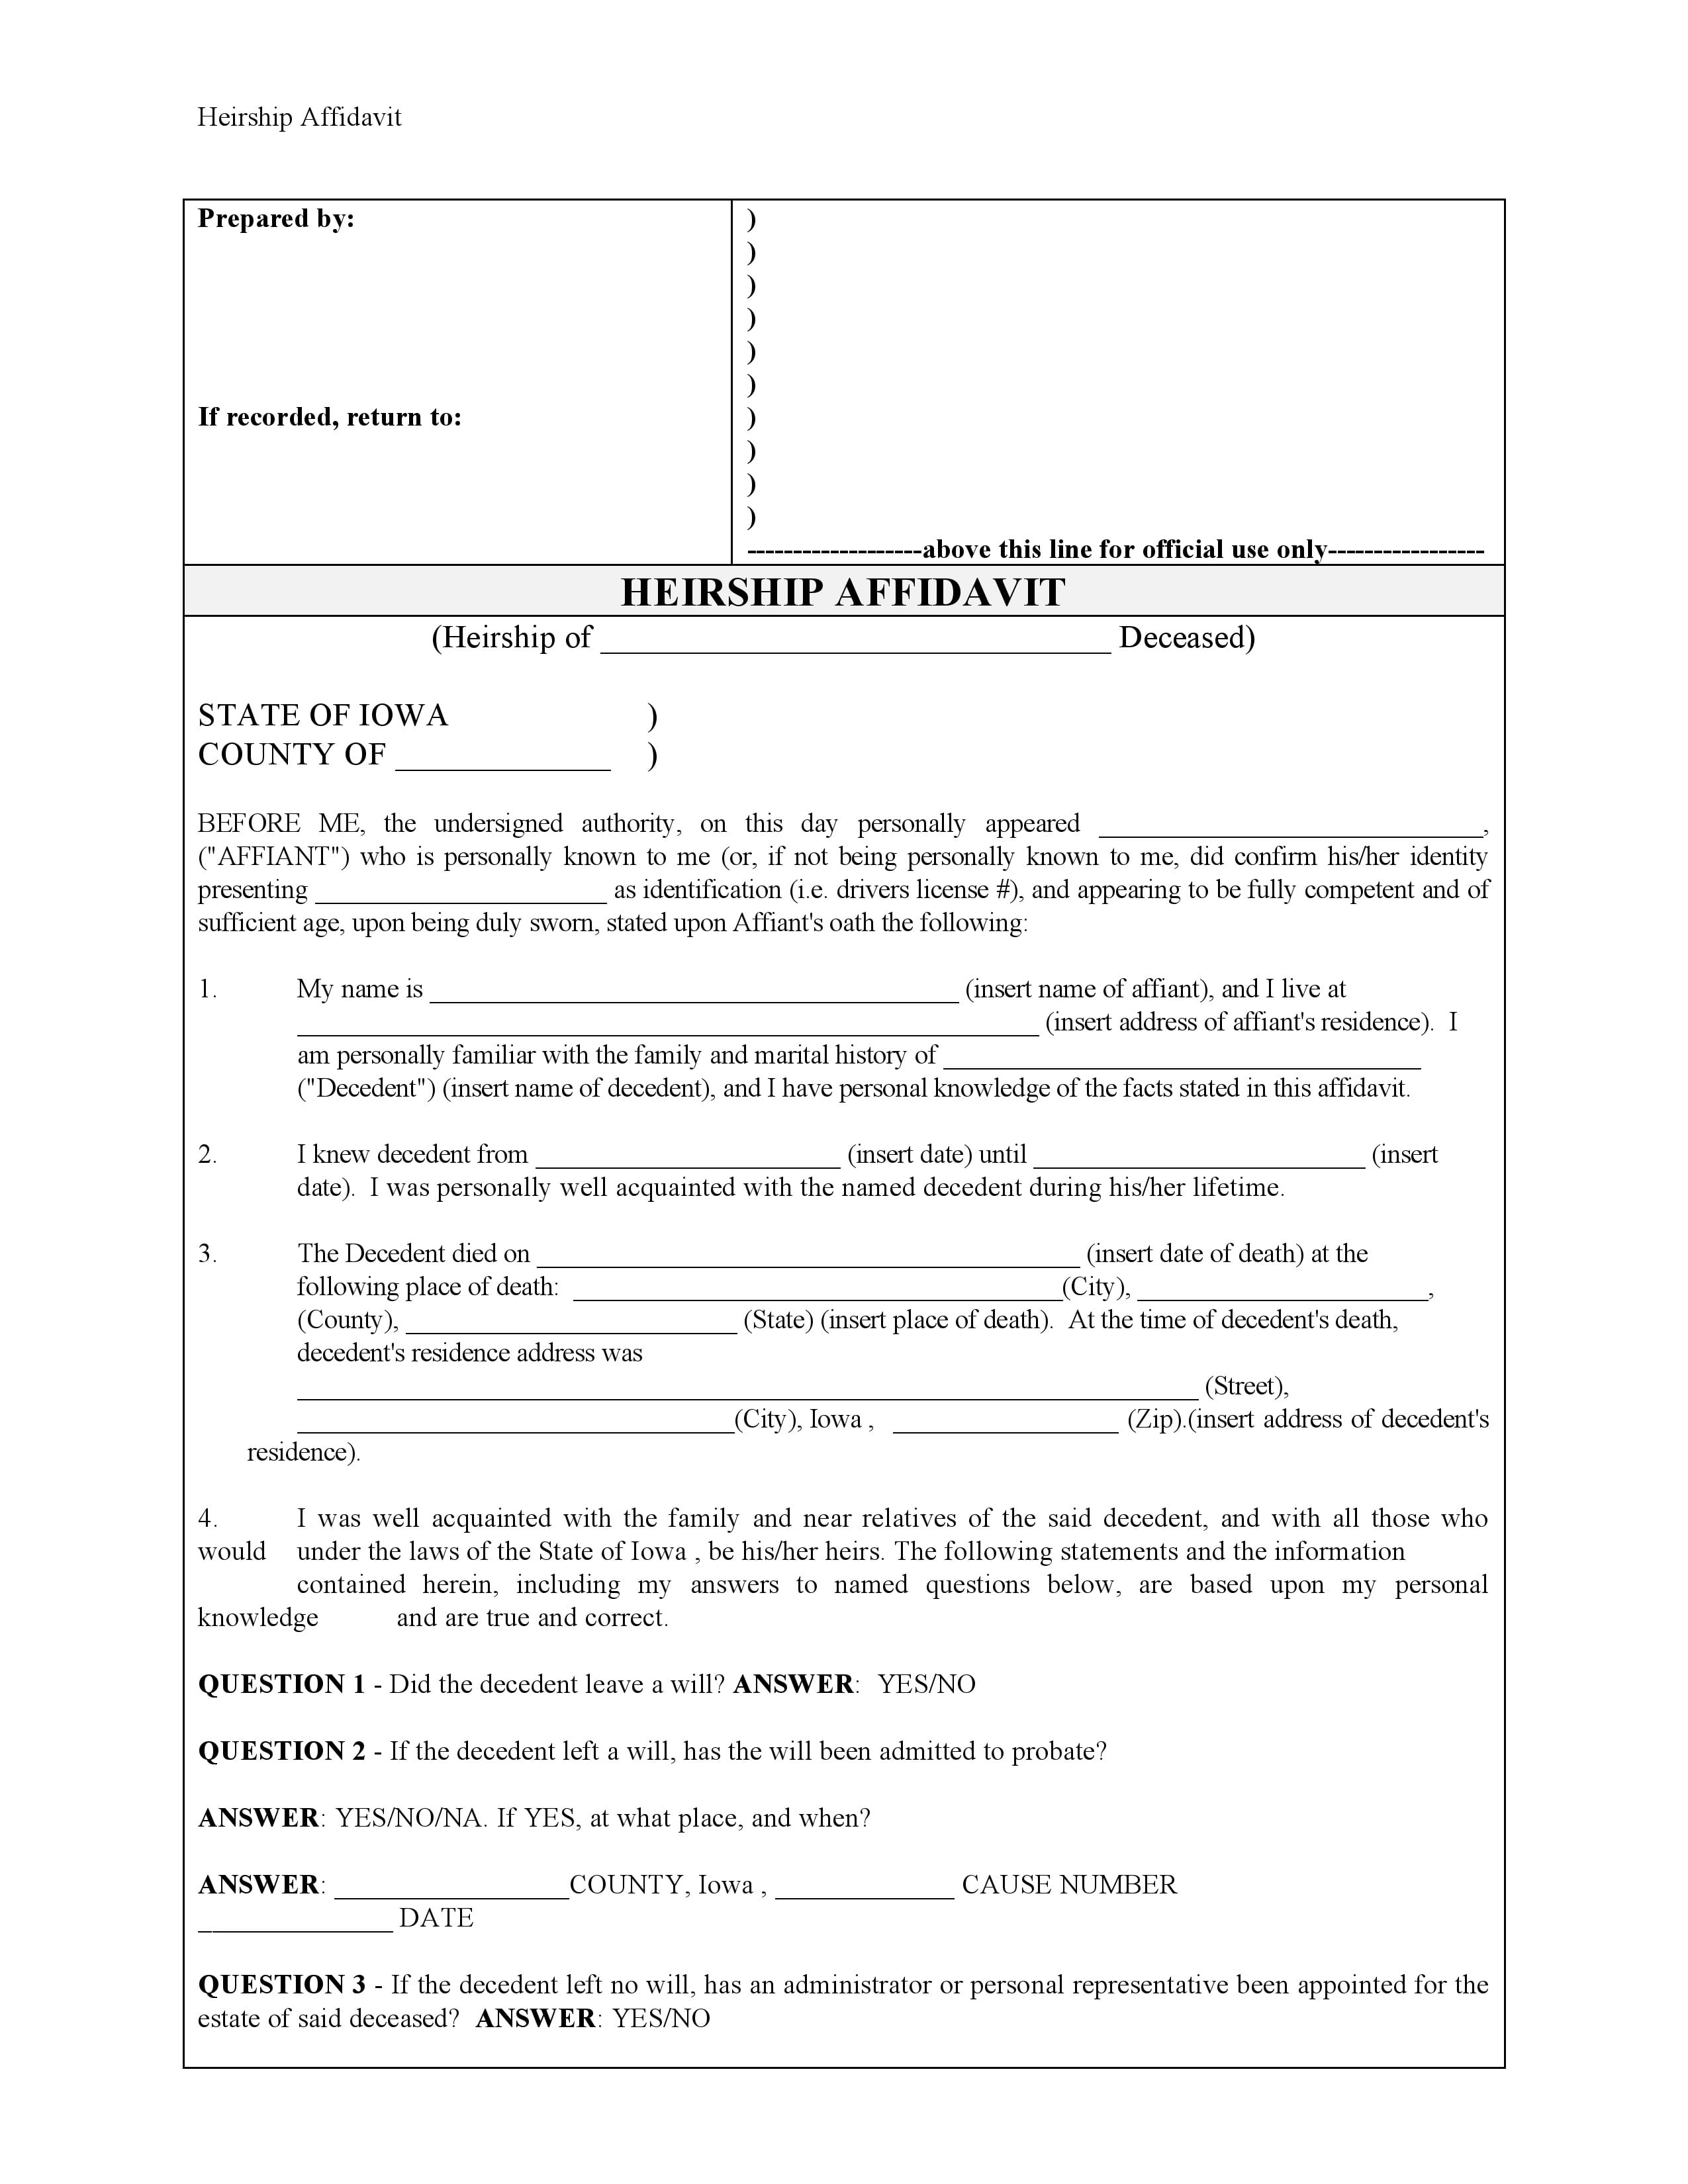 Iowa Affidavit Of Heirship